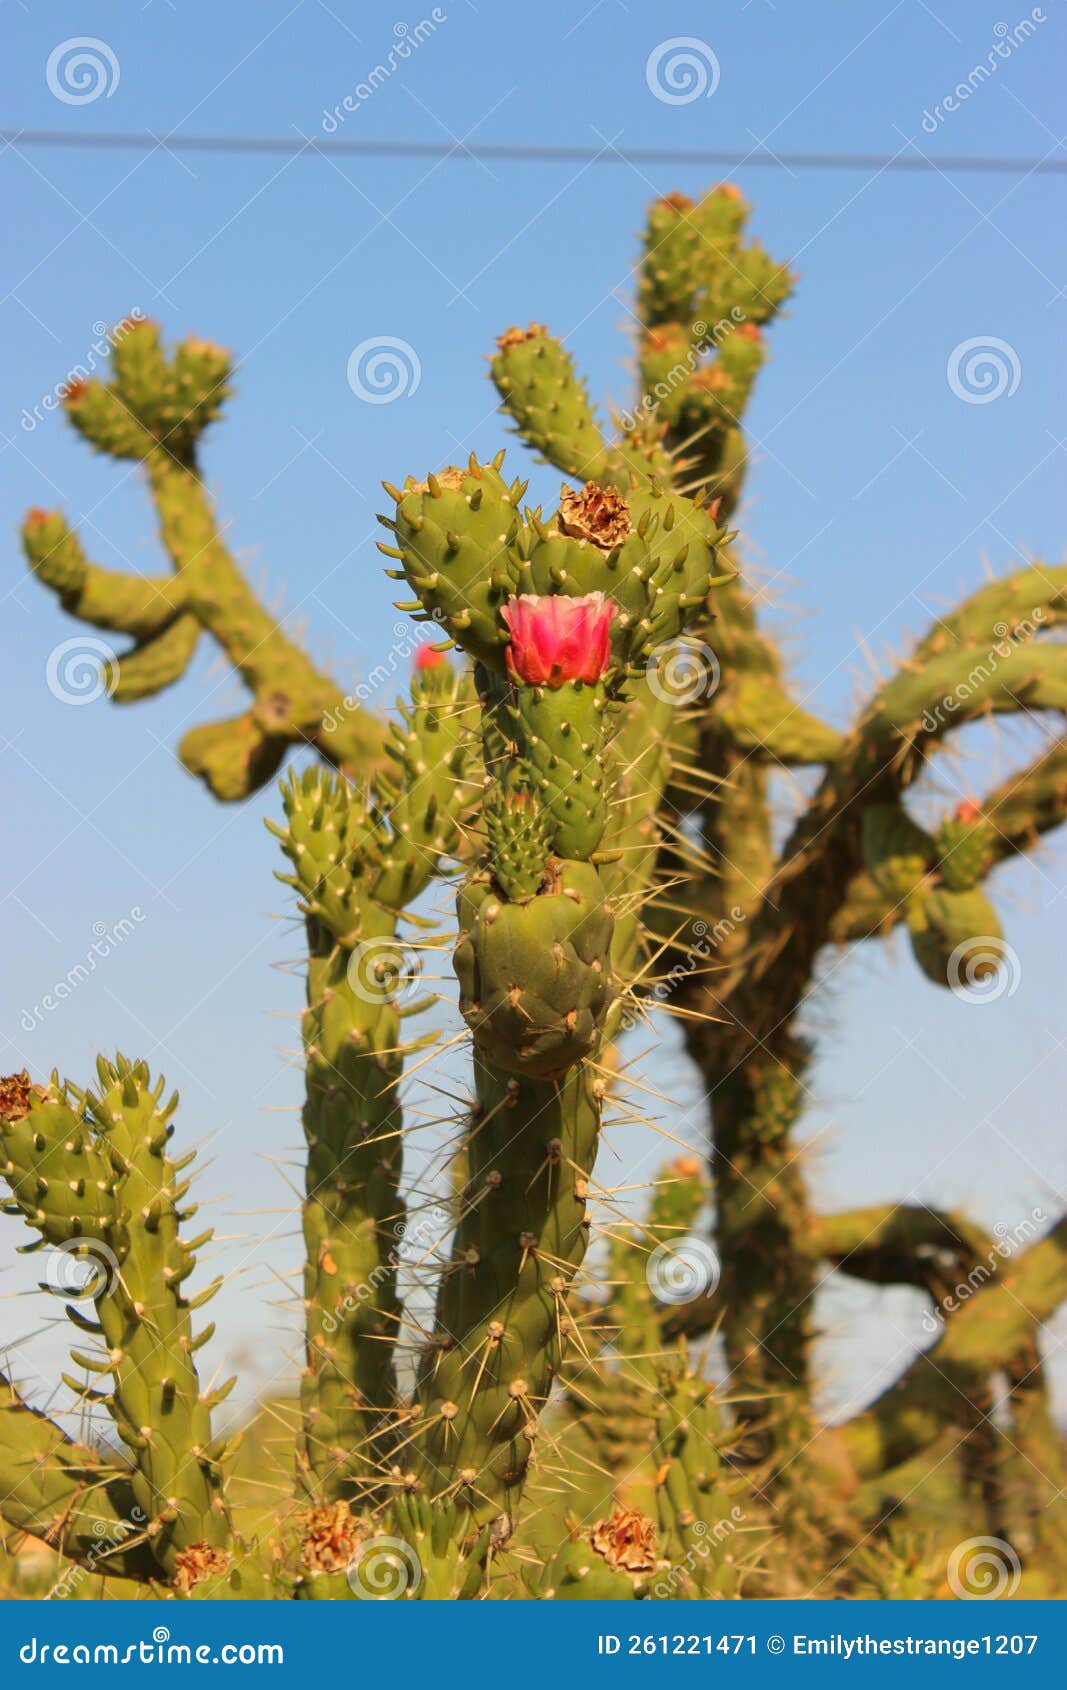 flower kaktus on tree spanien  alicante